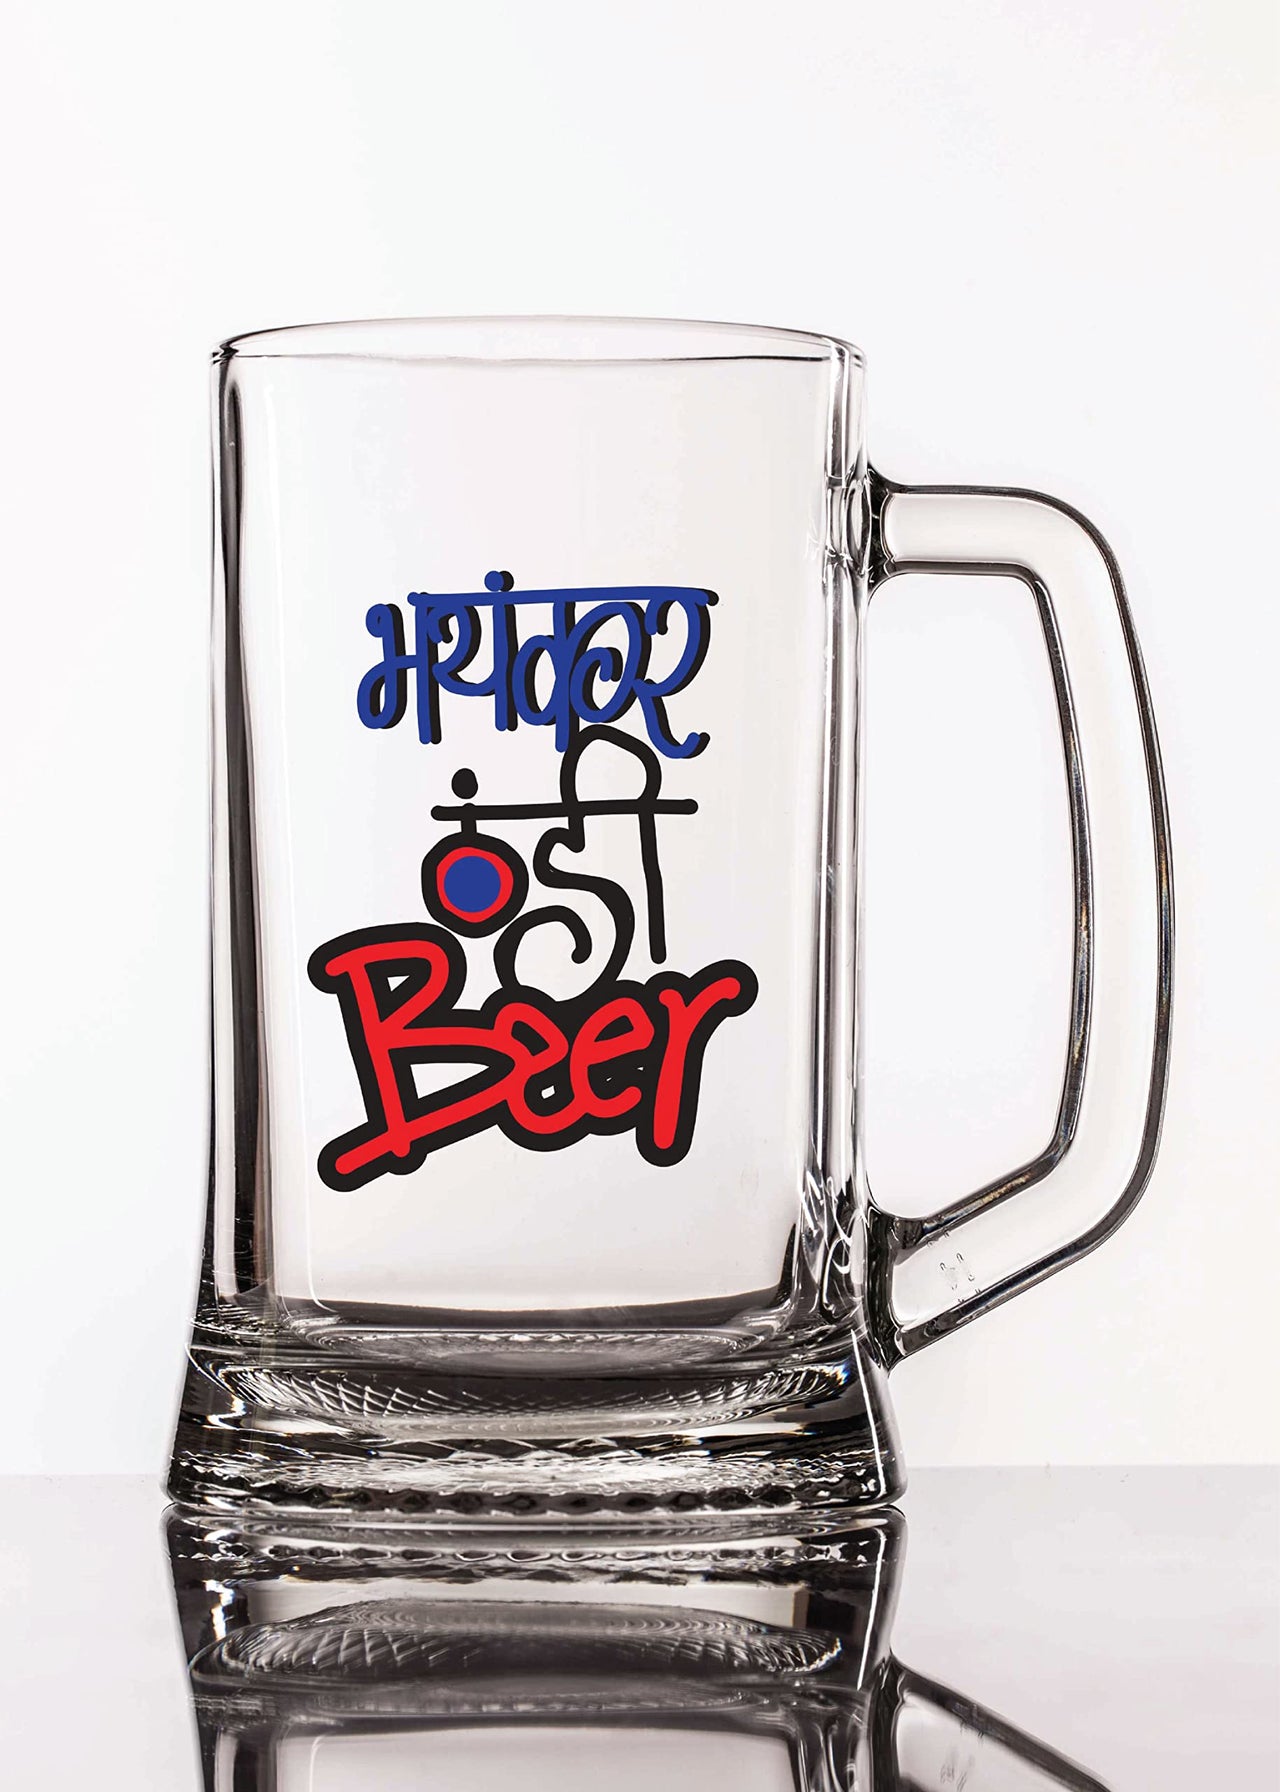 Thandi Beer - Beer Mug - 1 Piece, Clear, 500 ml - Transparent Glass Beer Mug -Printed Beer Mug with Handle Gift for Men, Dad